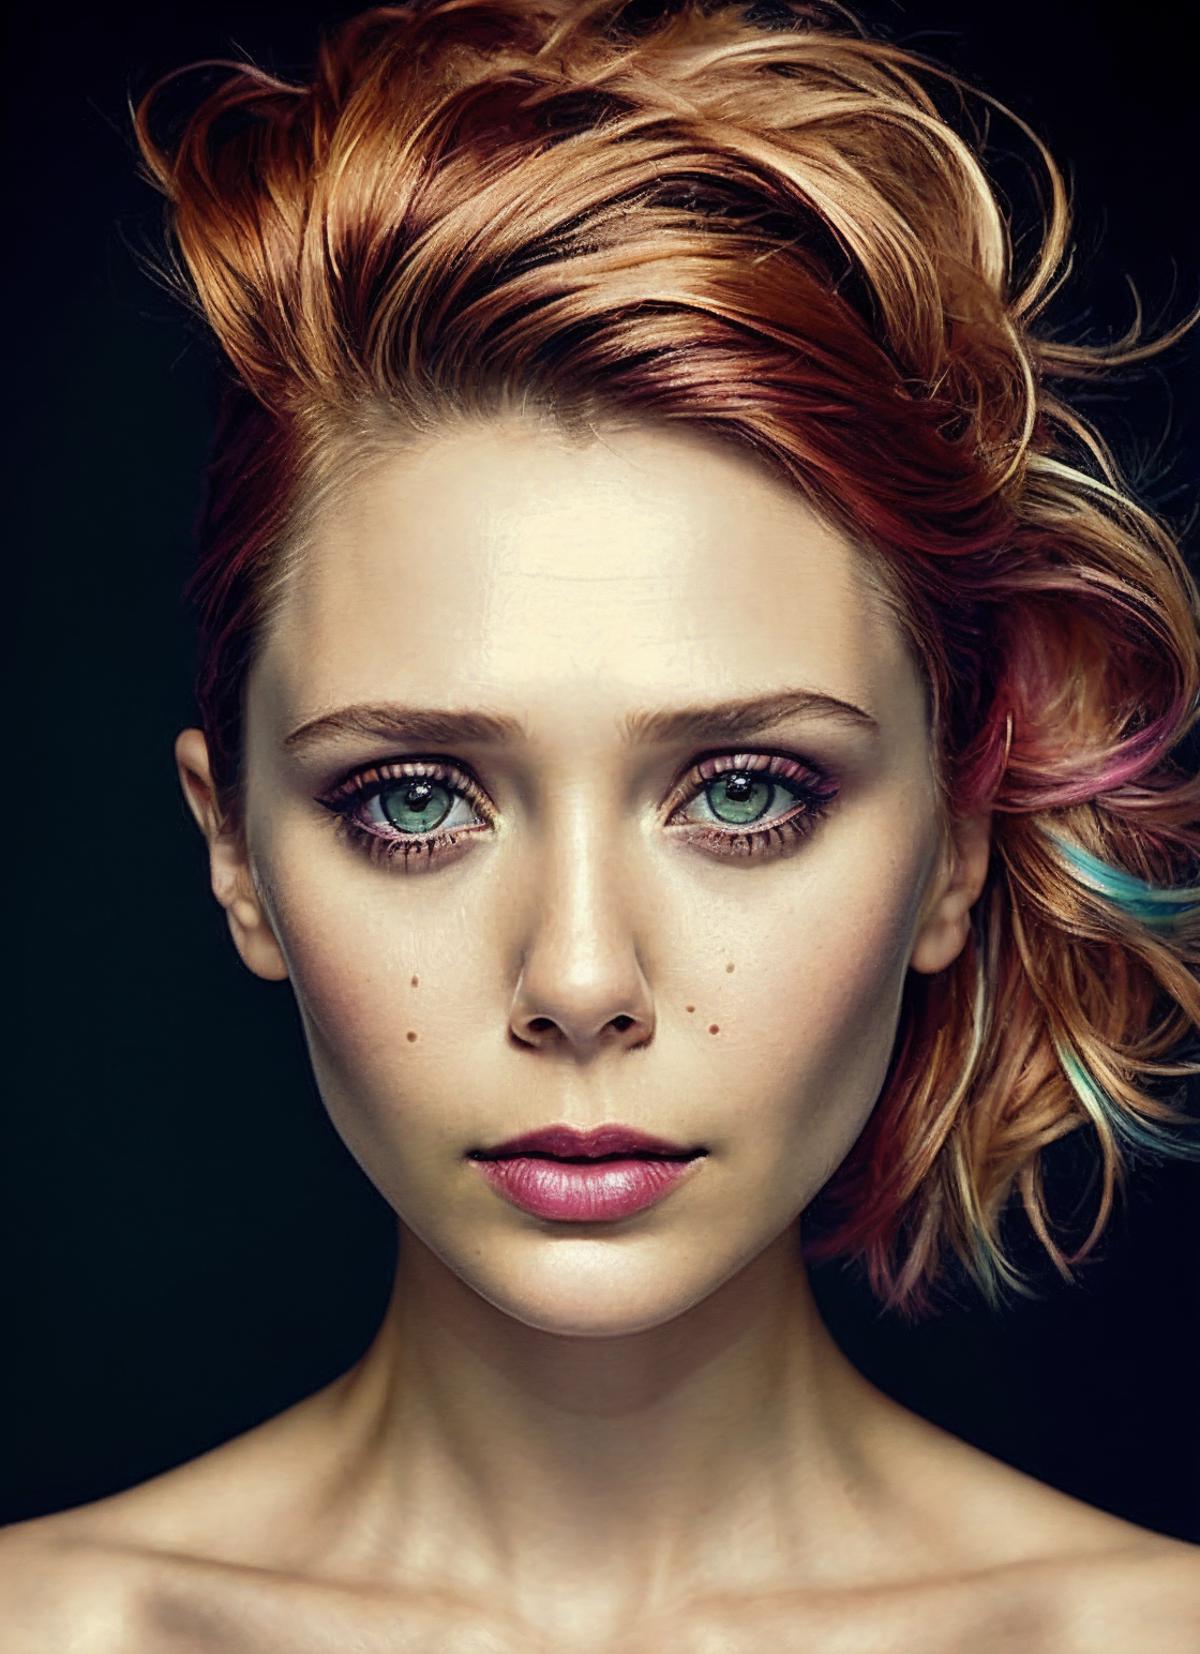 Elizabeth Olsen image by malcolmrey